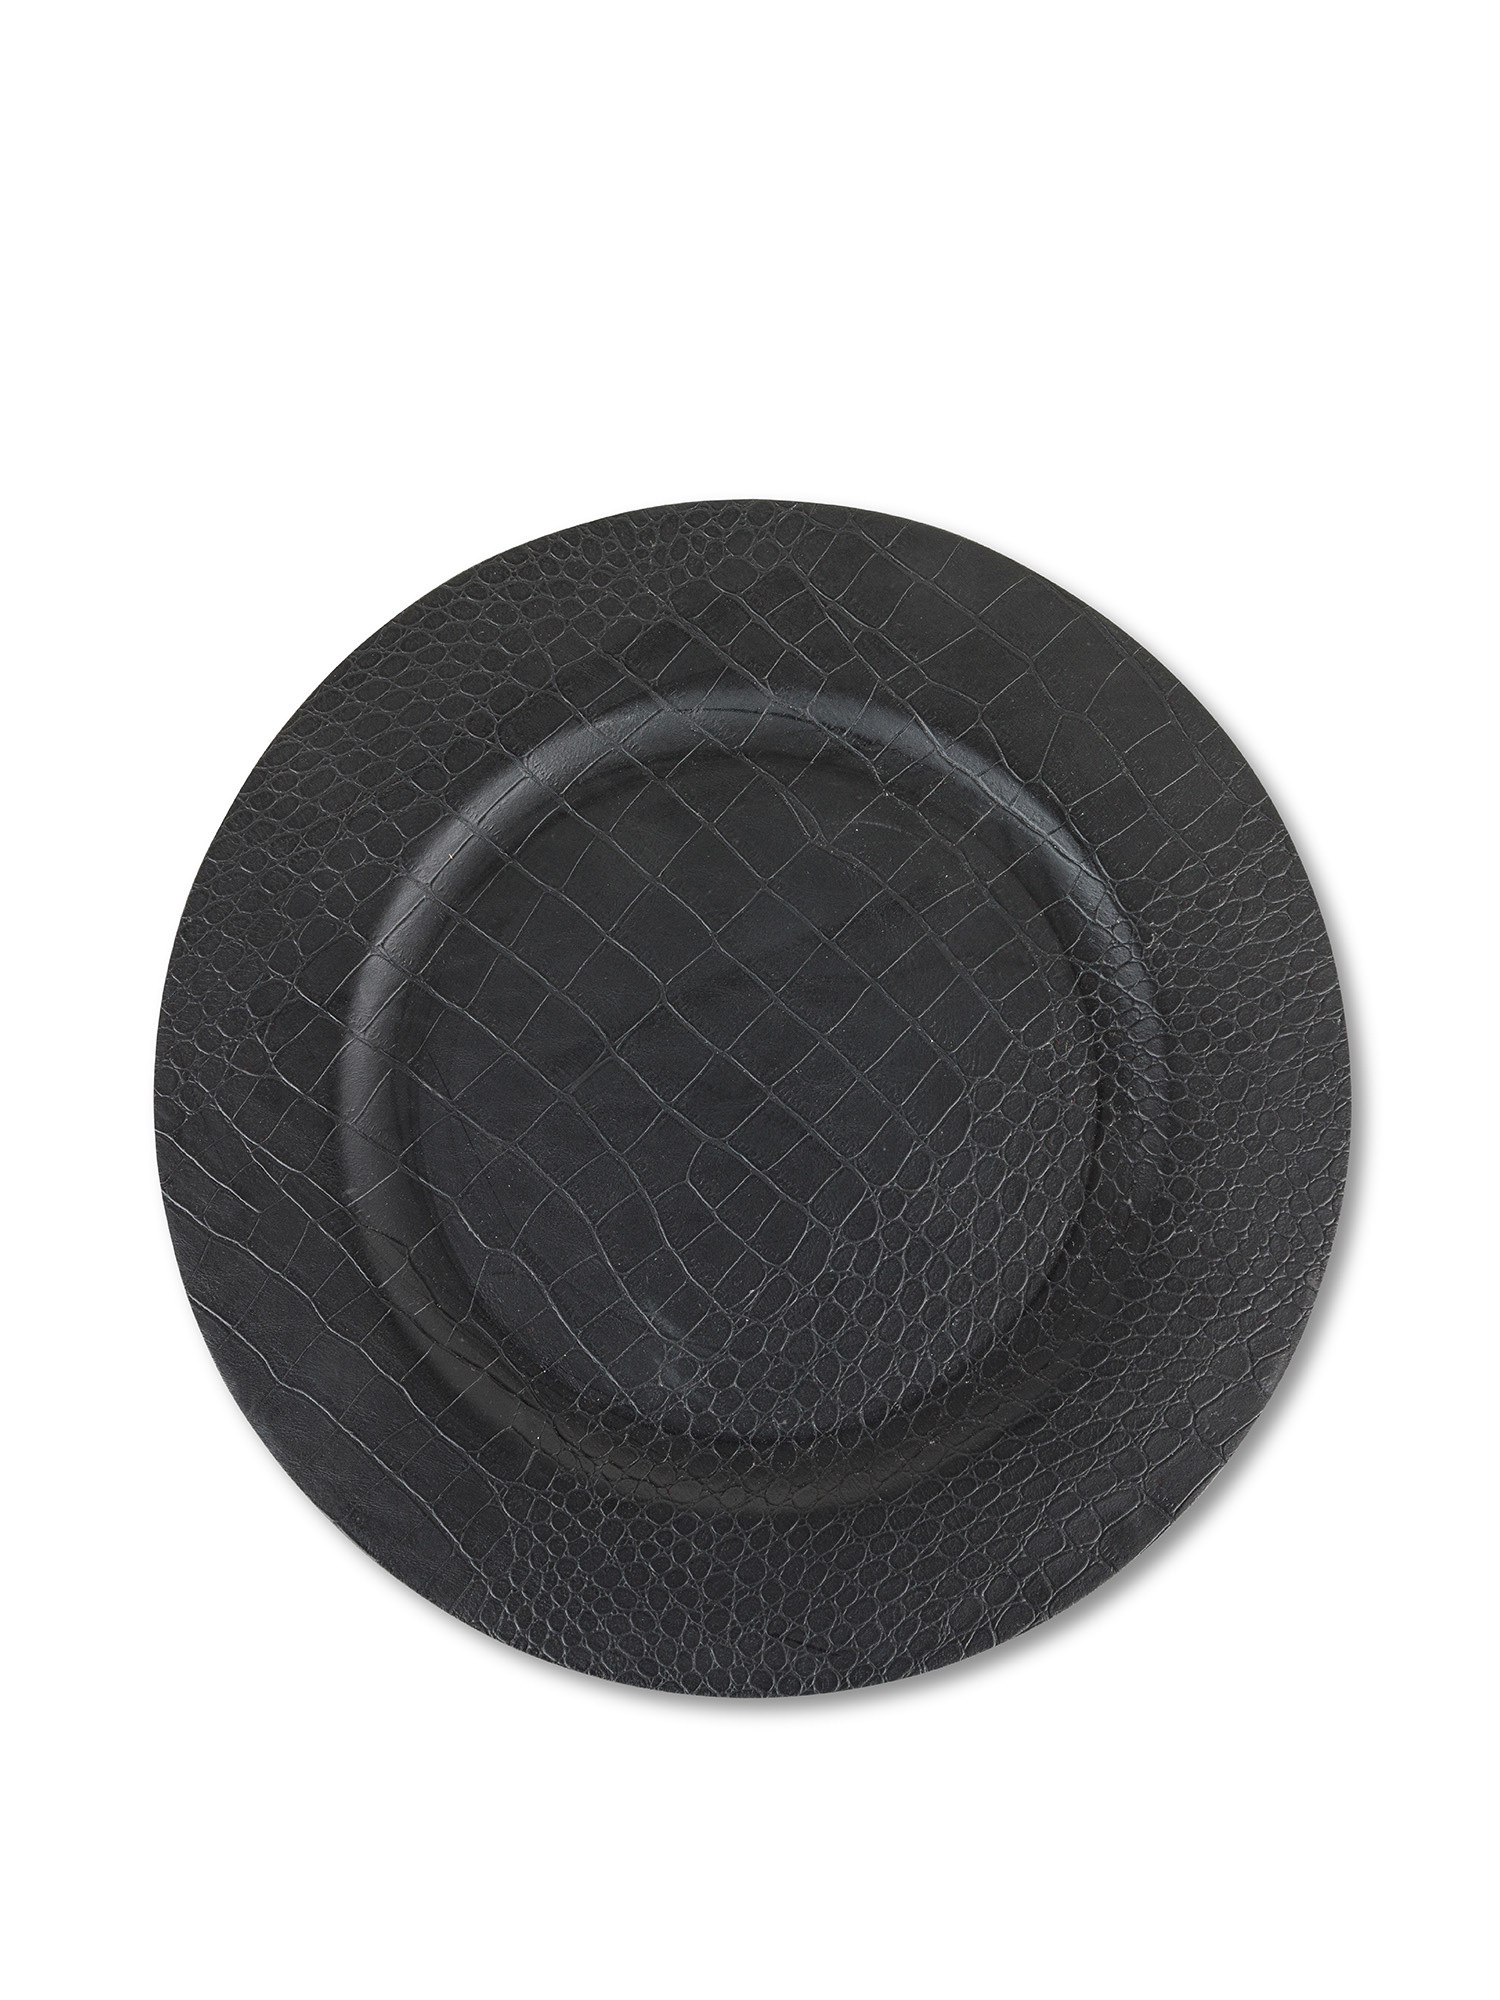 Snake-effect plastic charger plate, Black, large image number 0